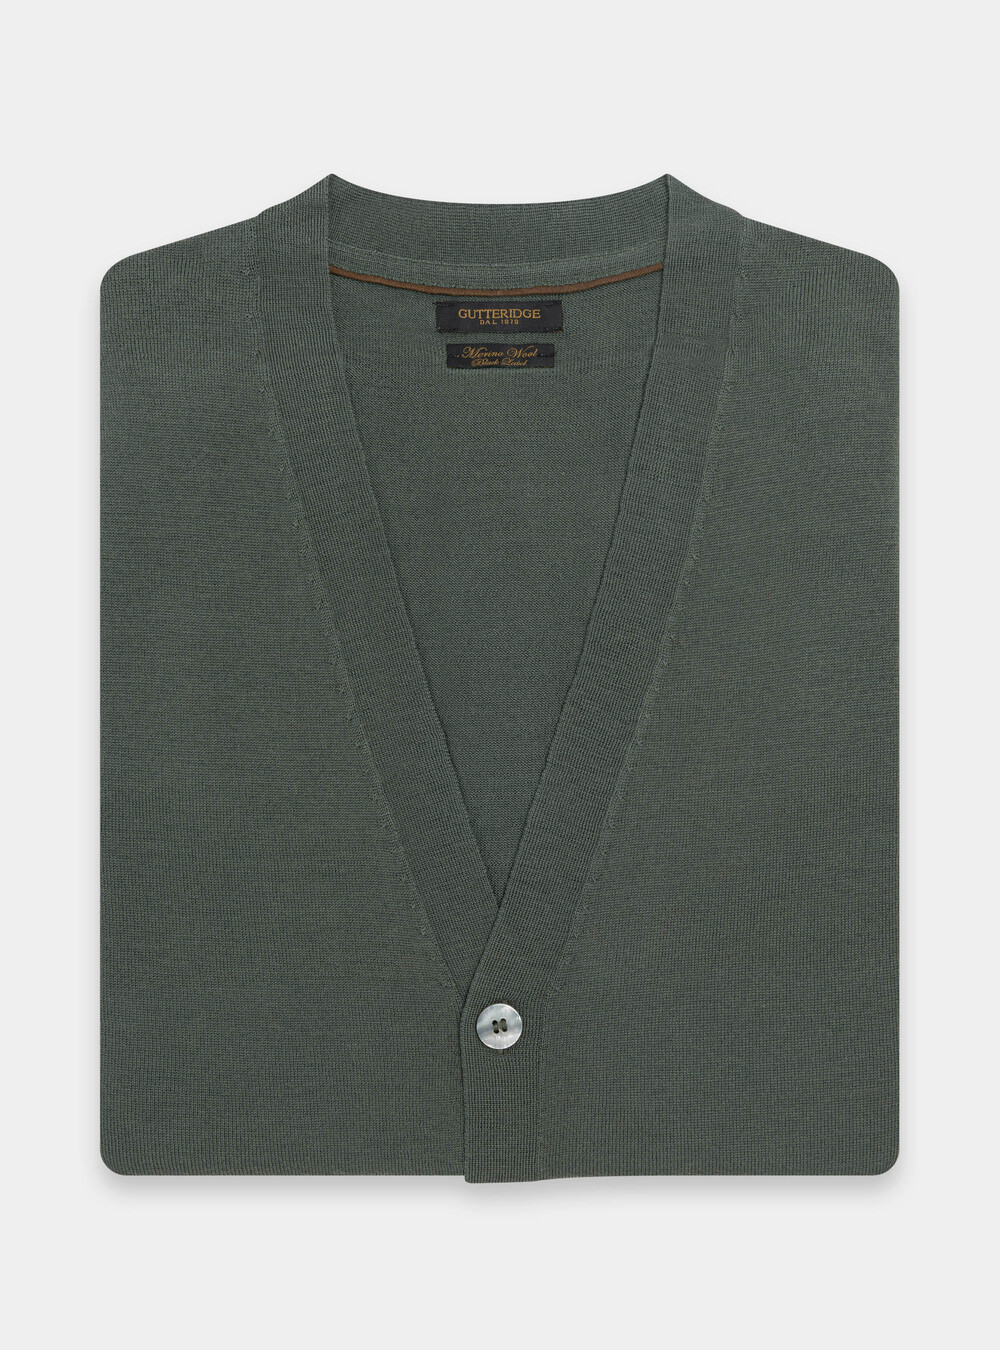 Gilet in maglia in pura lana merino | Gutteridge |  catalog-gutteridge-storefront Uomo